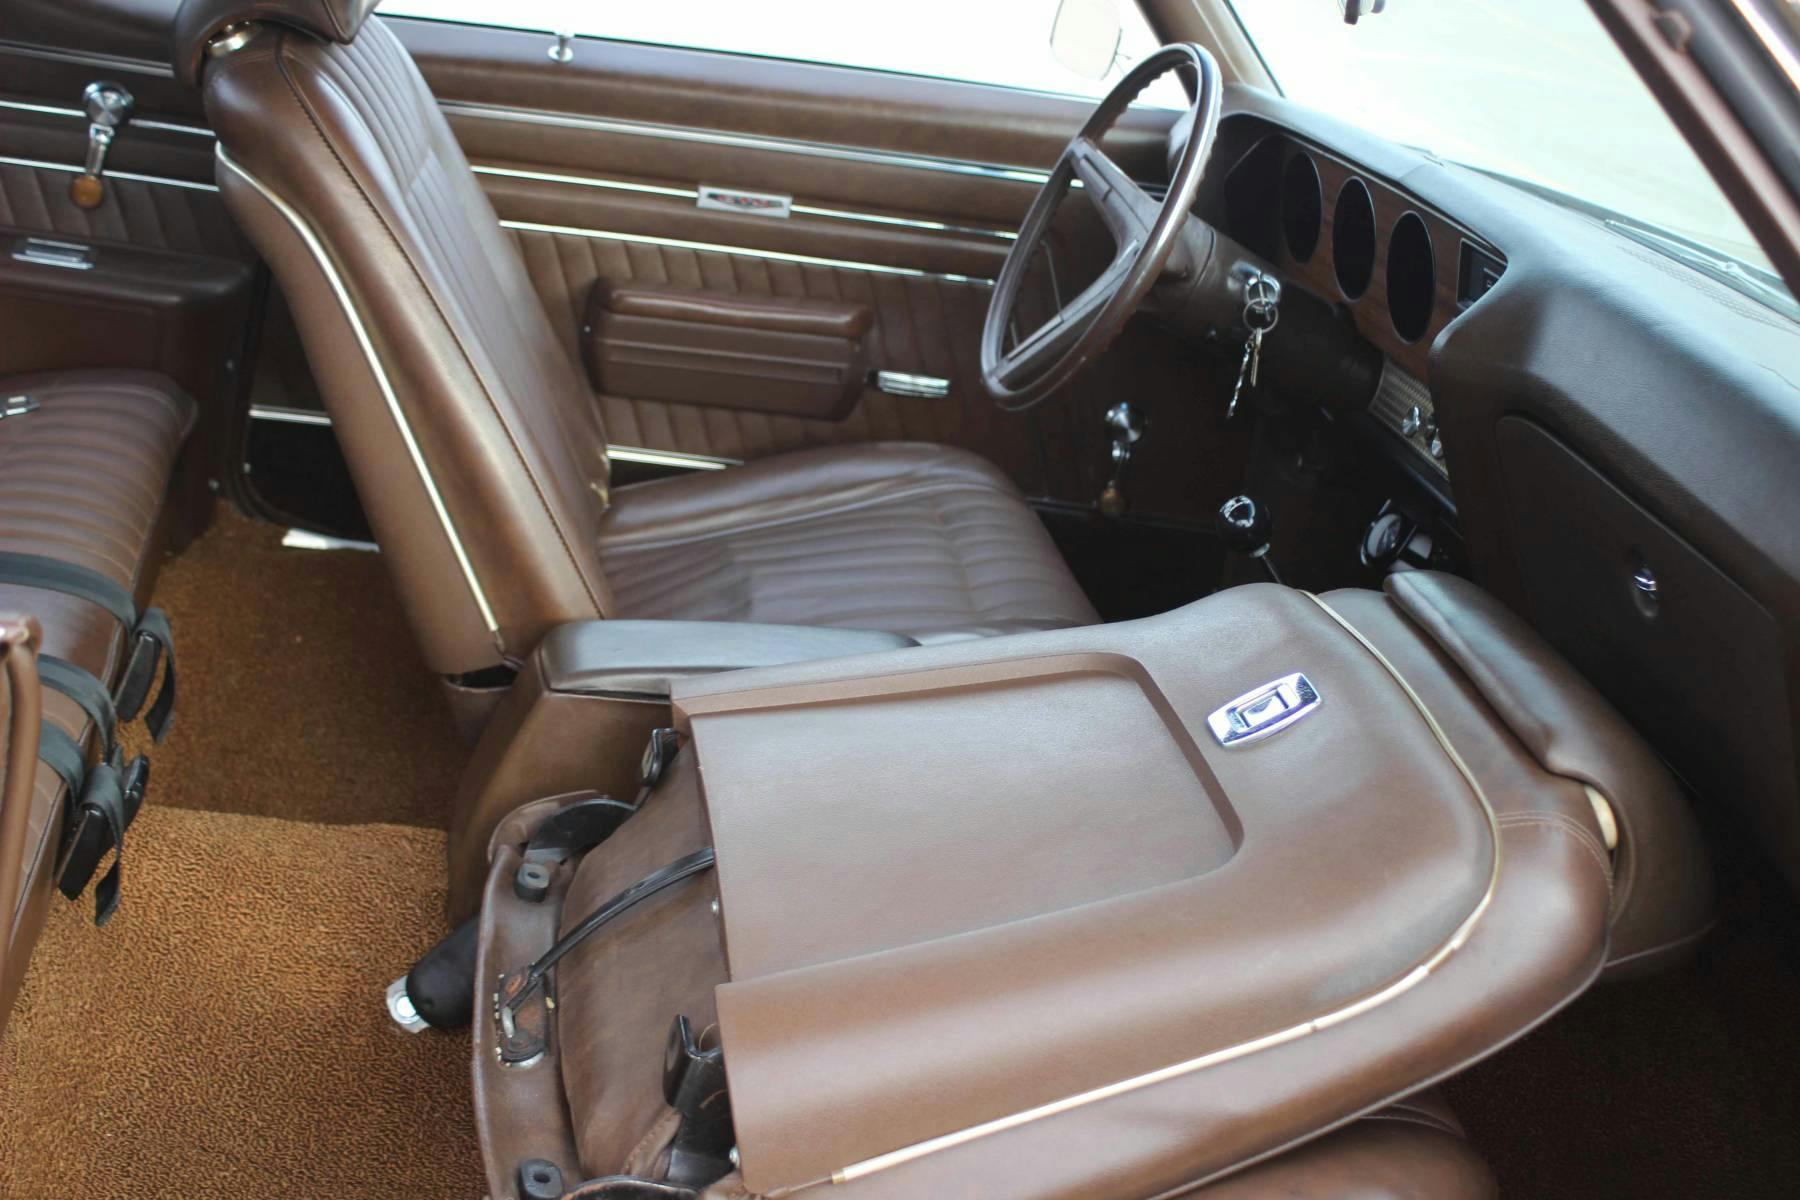 1970 Pontiac GTO Ram Air III interior seats